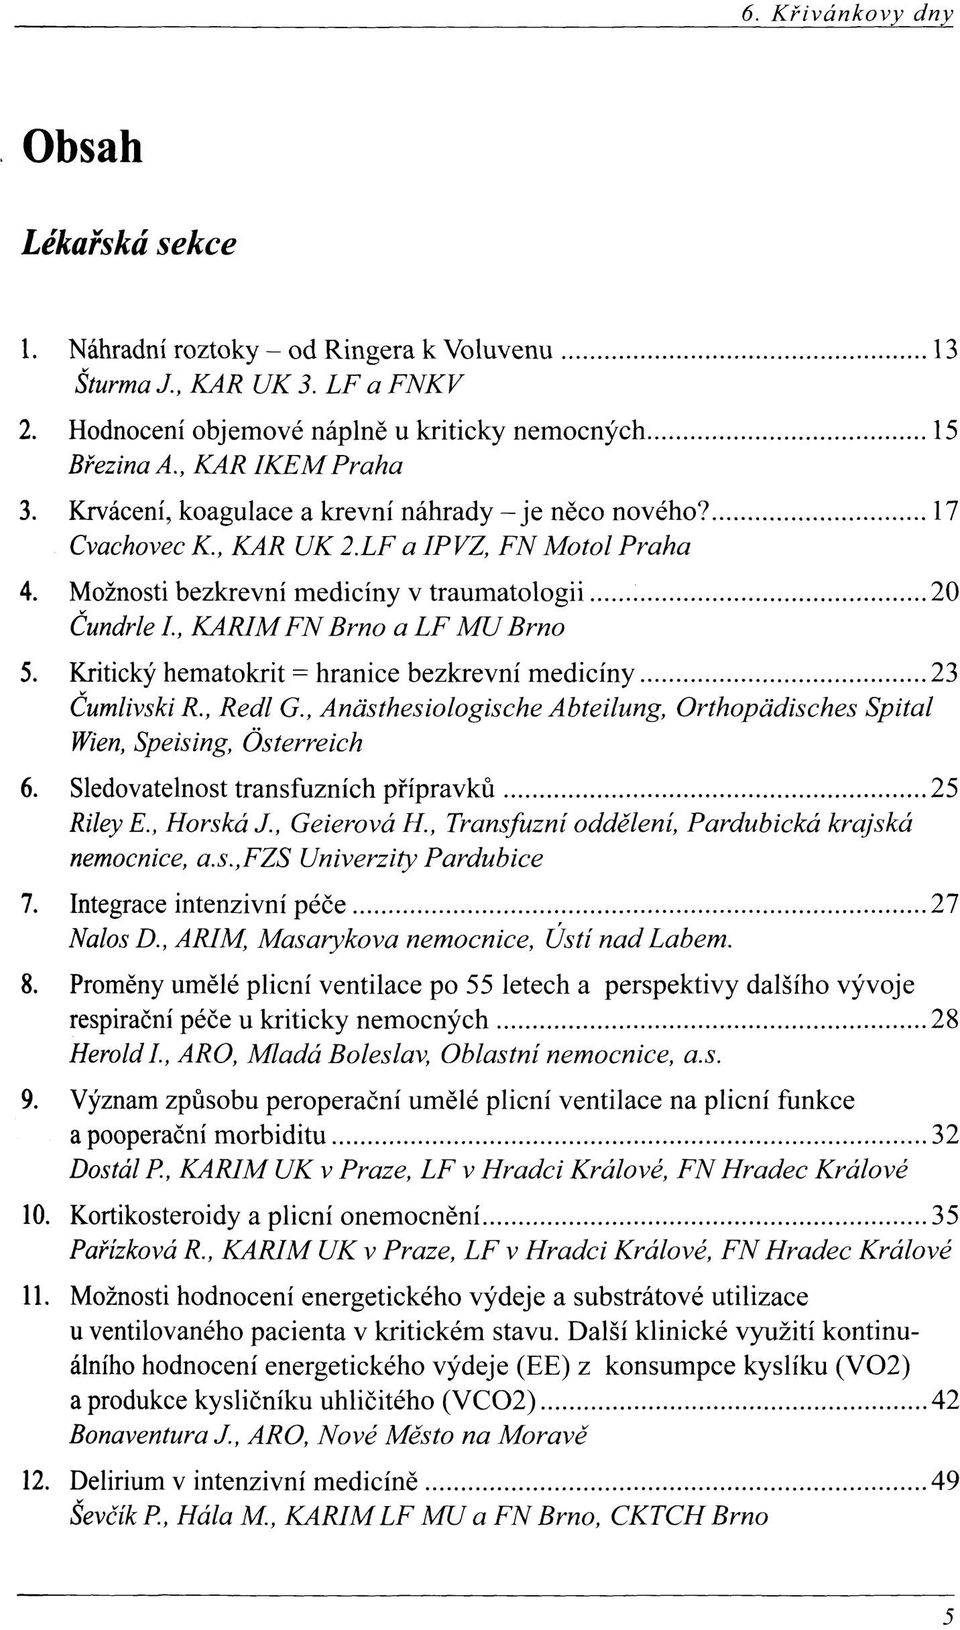 Kritický hematokrit = hranice bezkrevní medicíny 23 Čumlivski R., Redl G., Anästhesiologische Abteilung, Orthopädisches Spital Wien, Speising, Österreich 6.